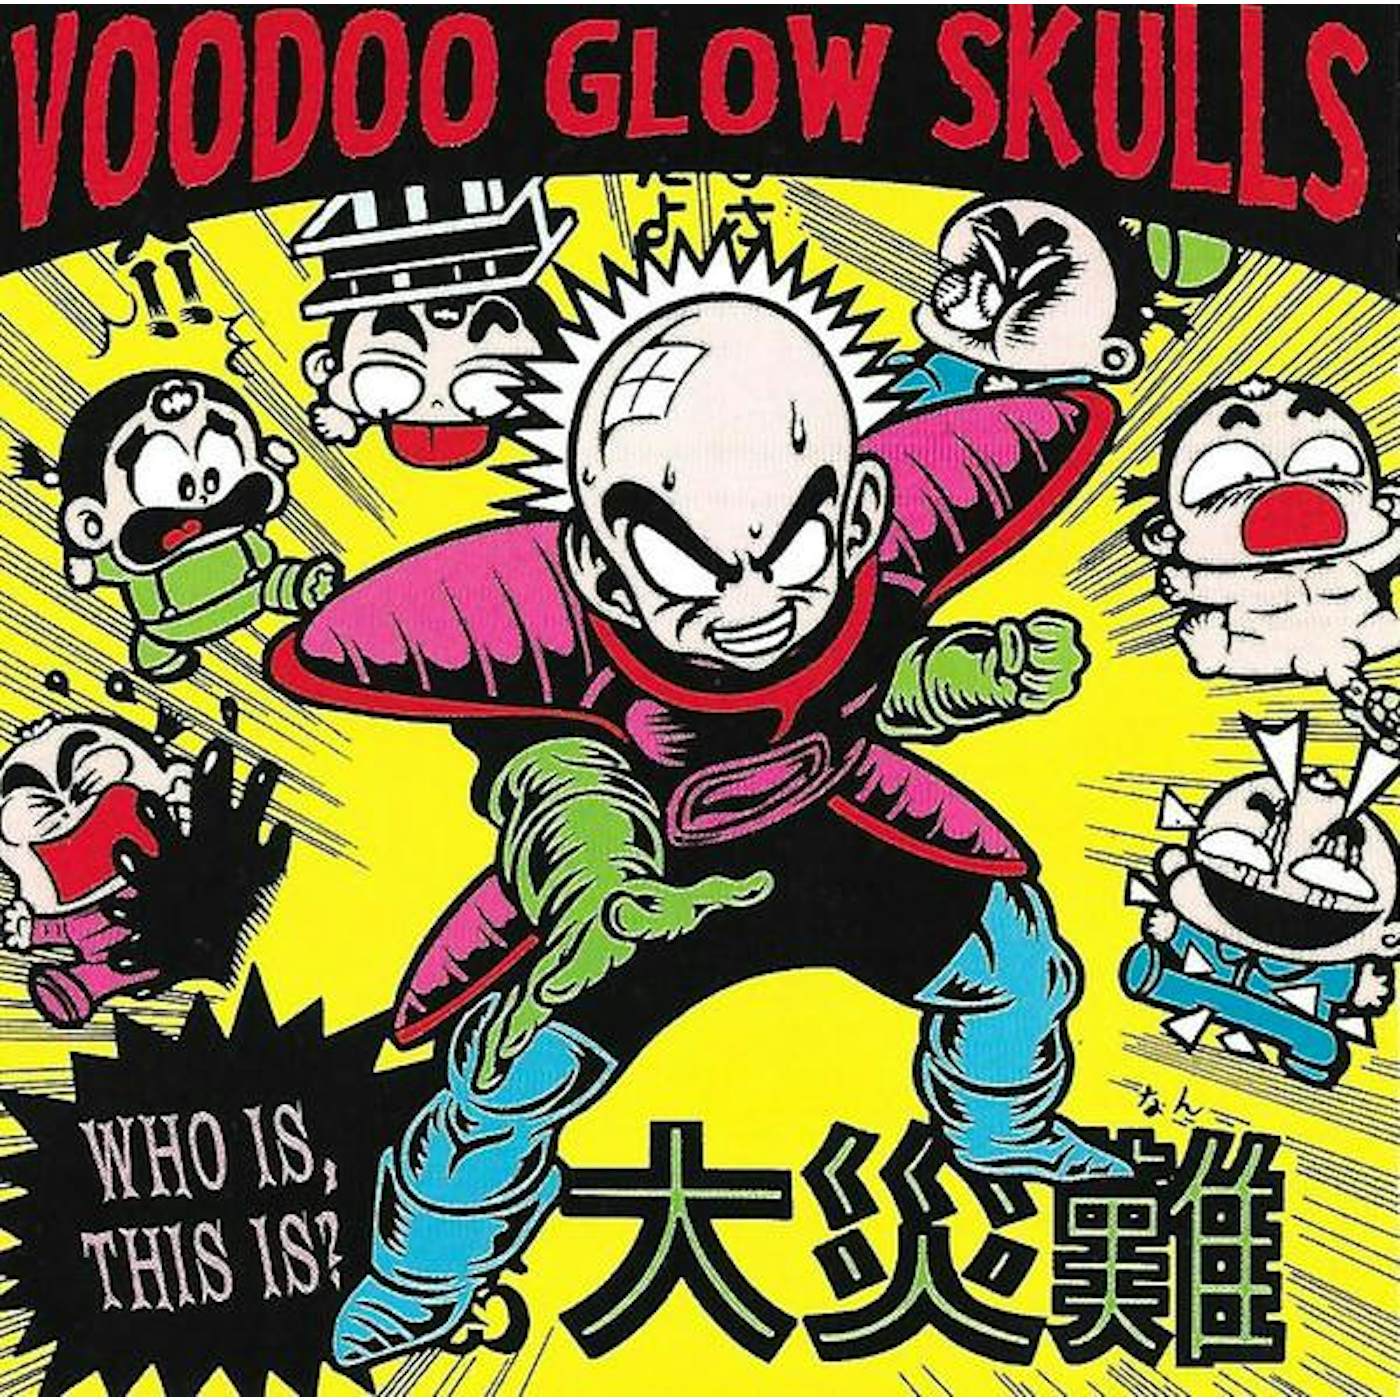 Voodoo Glow Skulls WHO IS, THIS IS CD